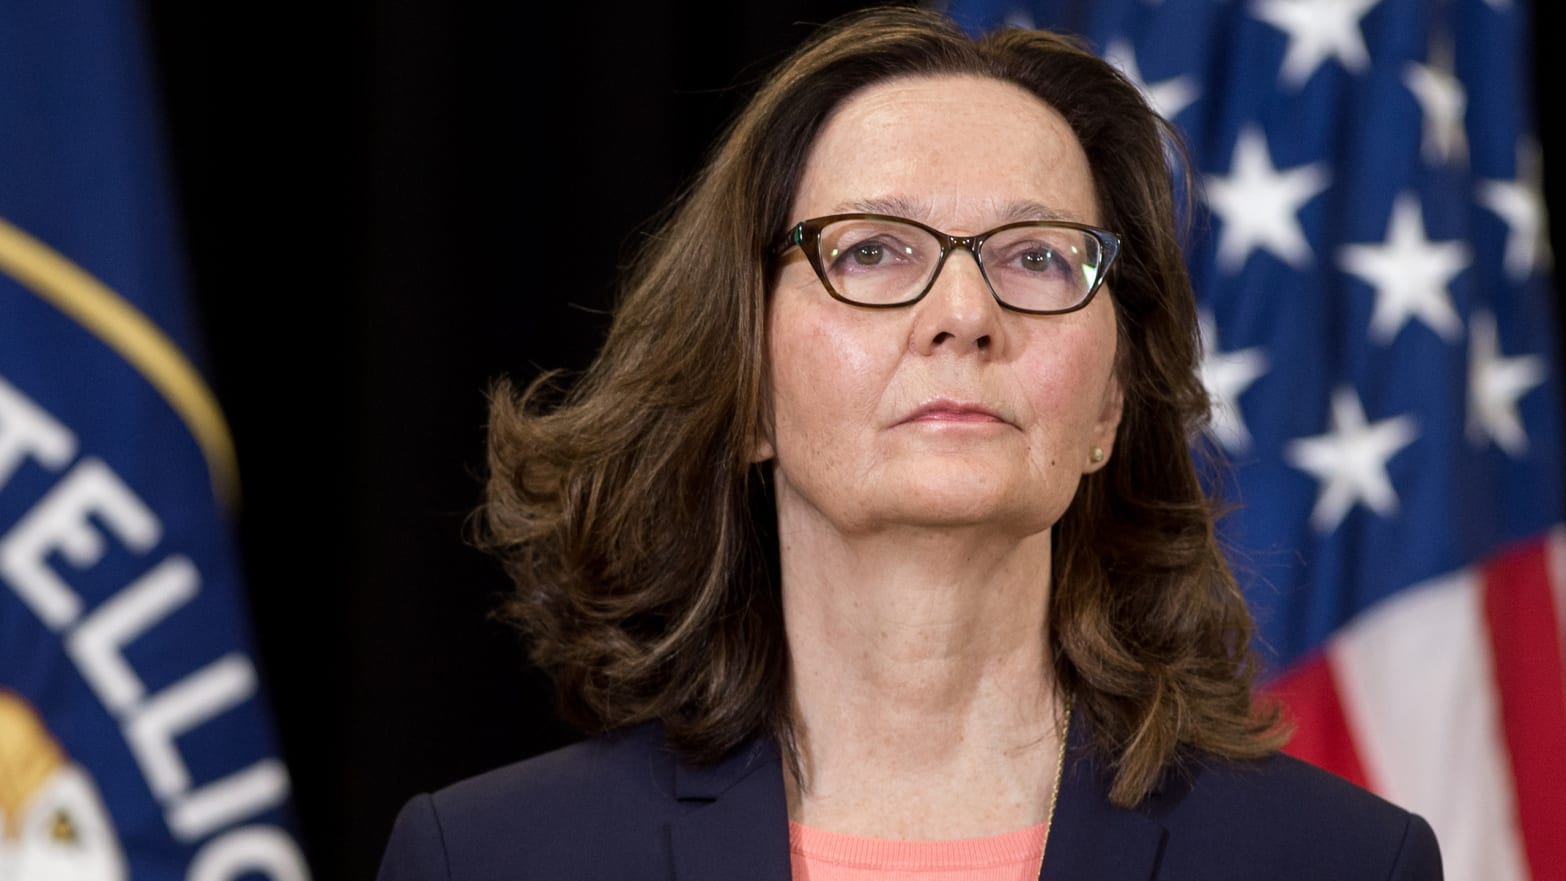 CIA Chief Gina Haspel Silent as Trump Attacks Her Predecessor and Patron